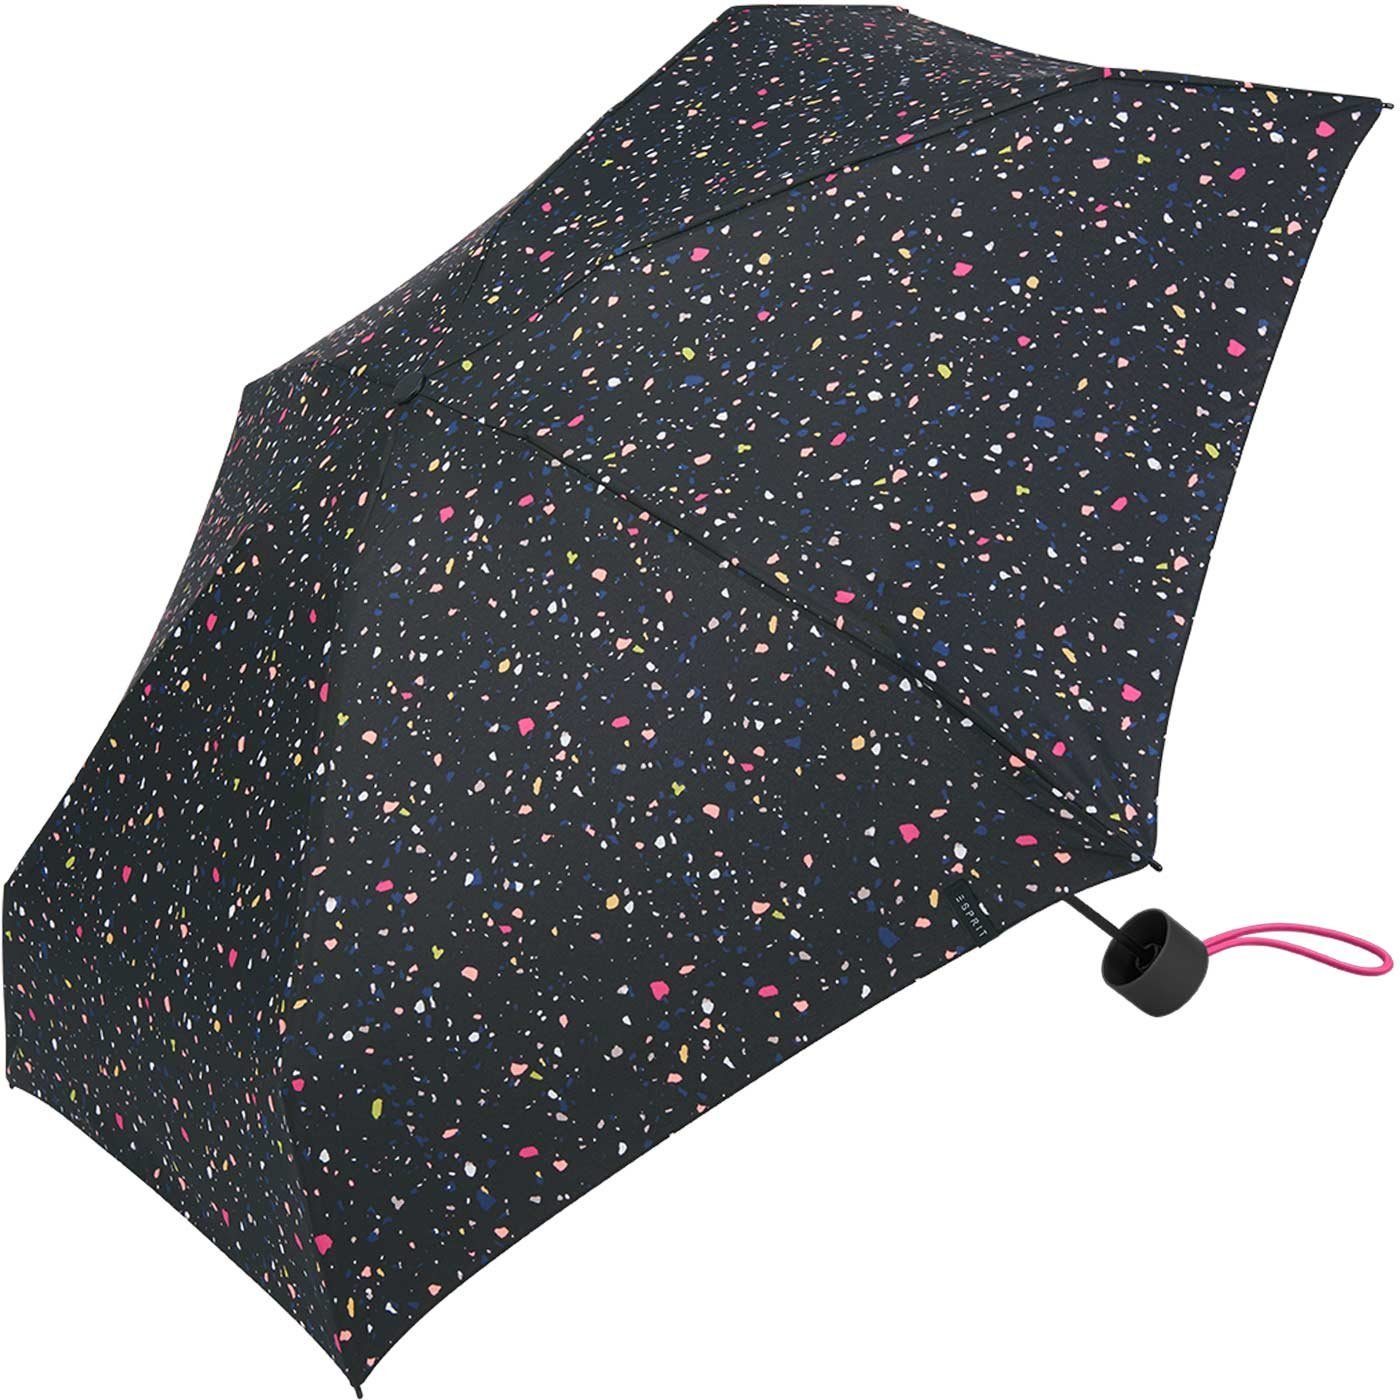 klein, Esprit Petito Dots winzig - Trendfarben in den Regenschirm Terrazzo schwarz, Taschenregenschirm - Mini neuen